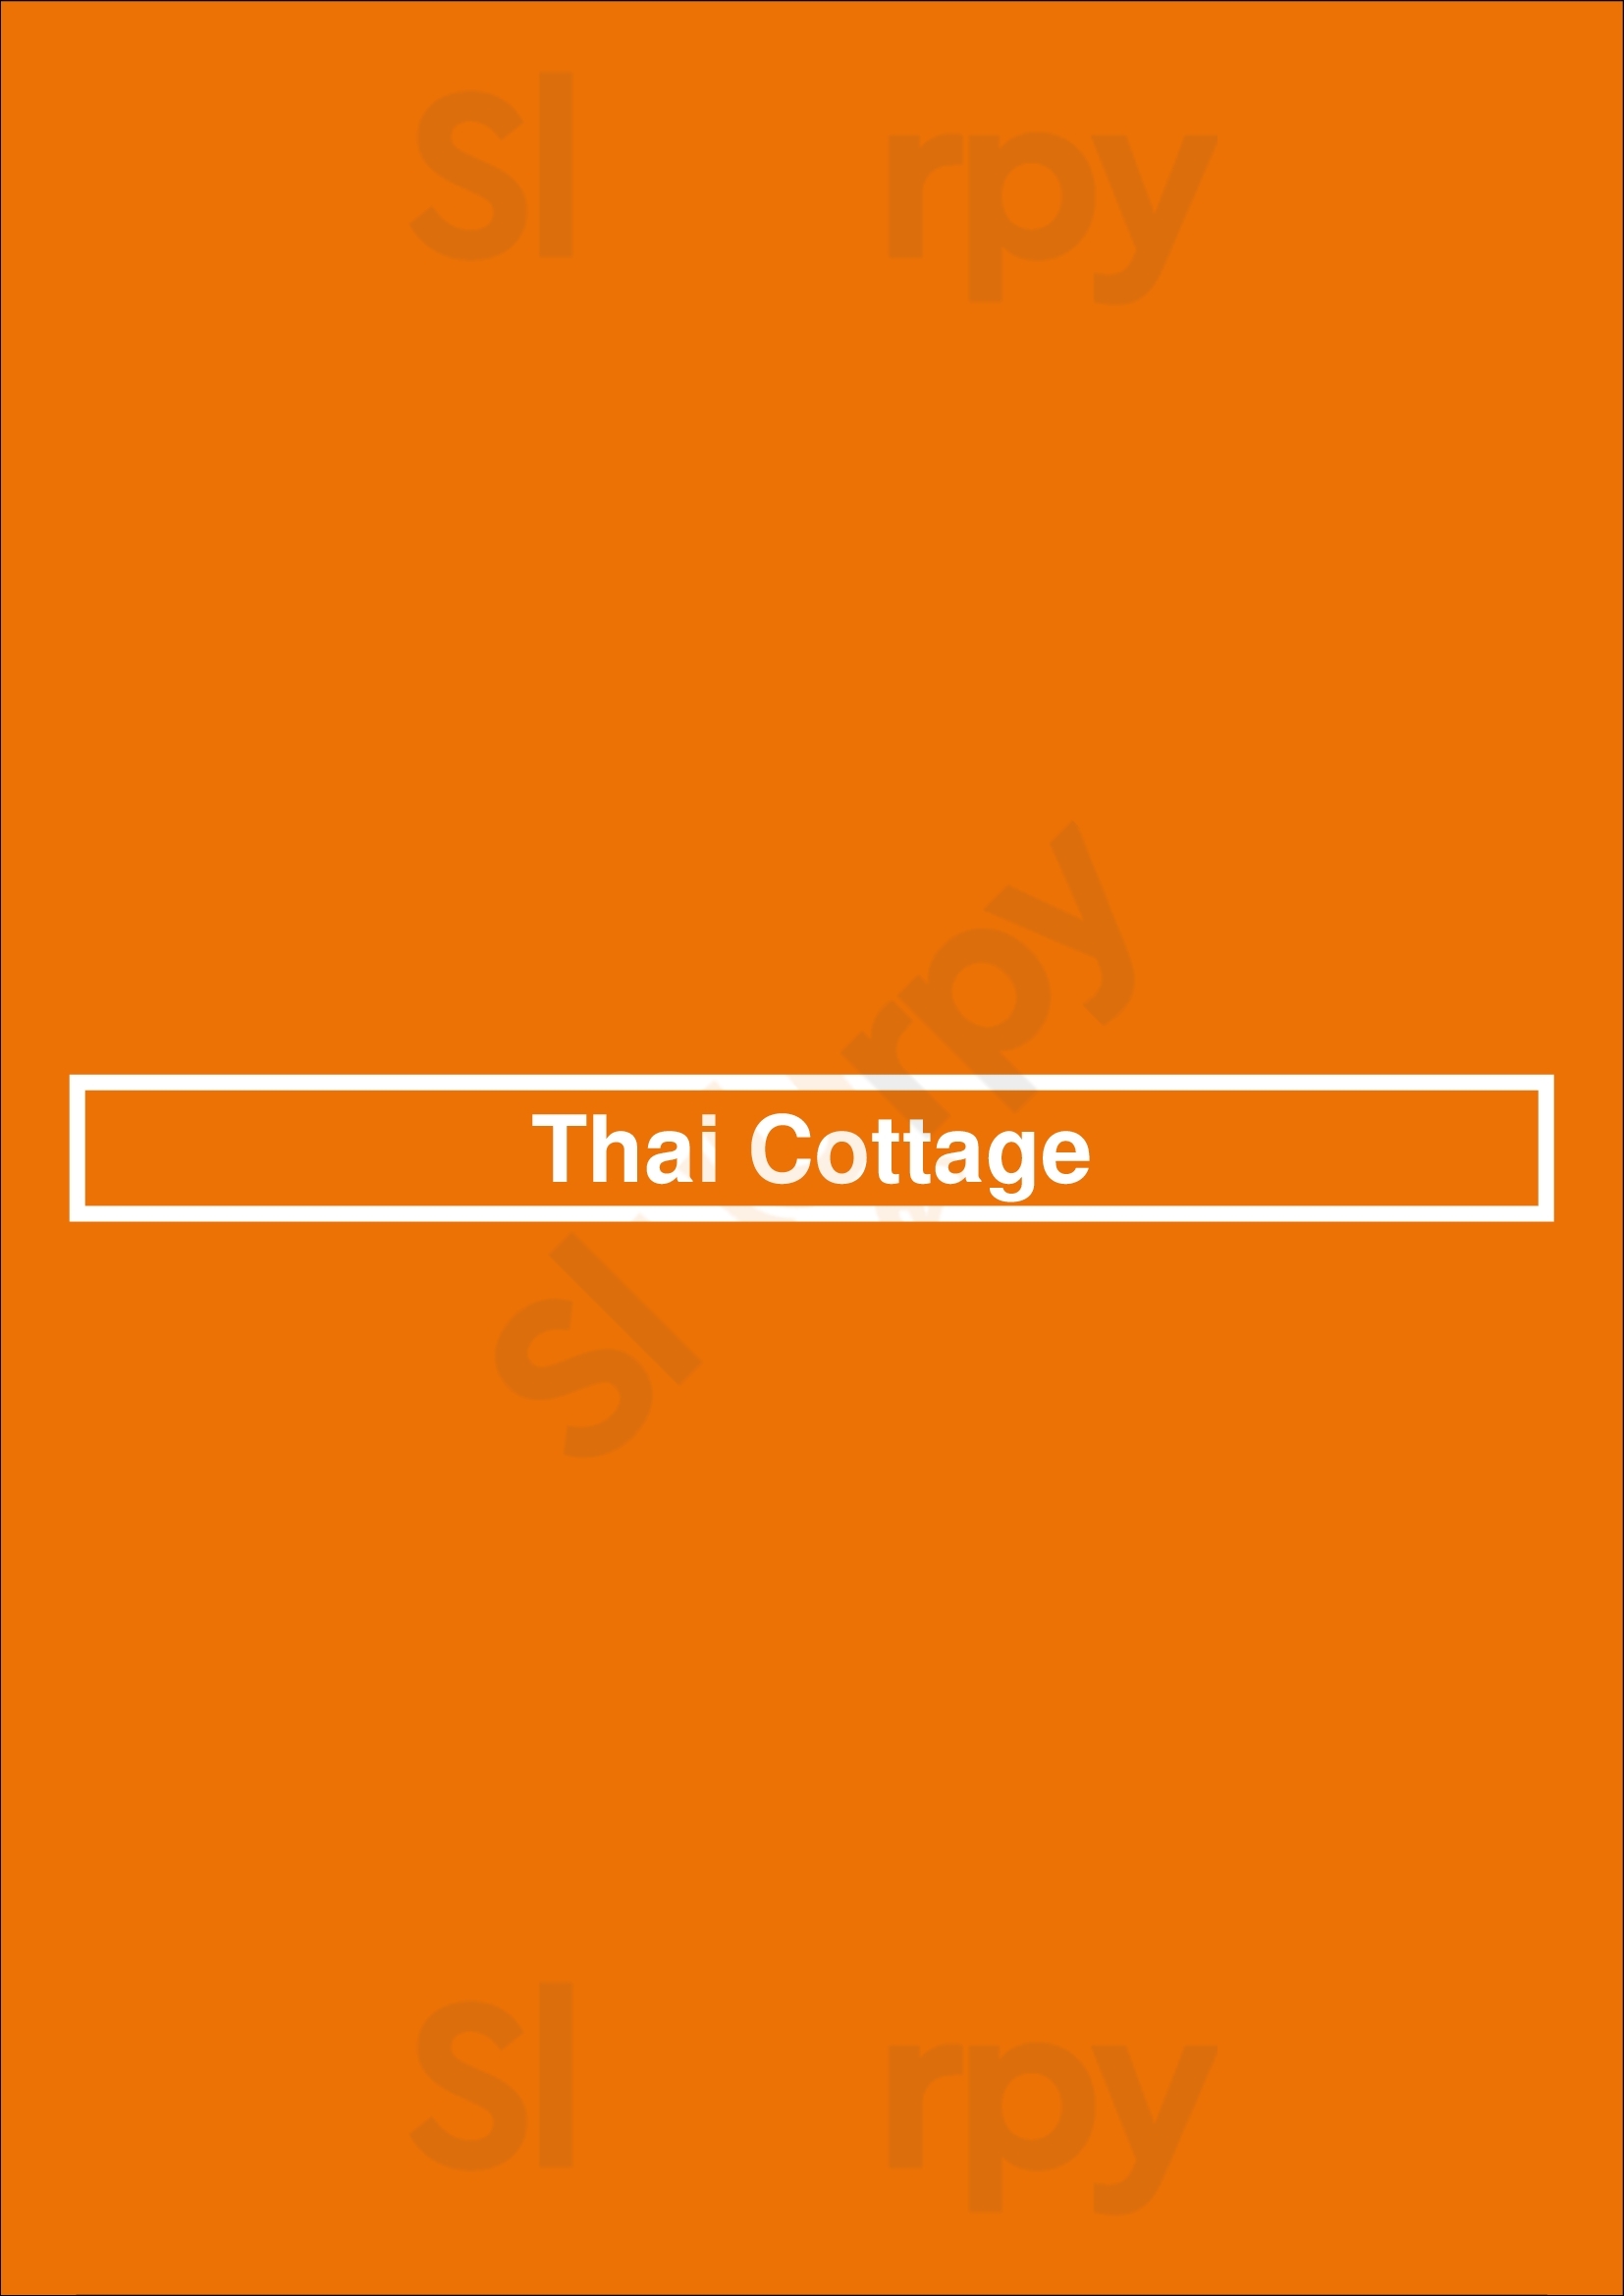 Thai Cottage Westheimer Houston Menu - 1